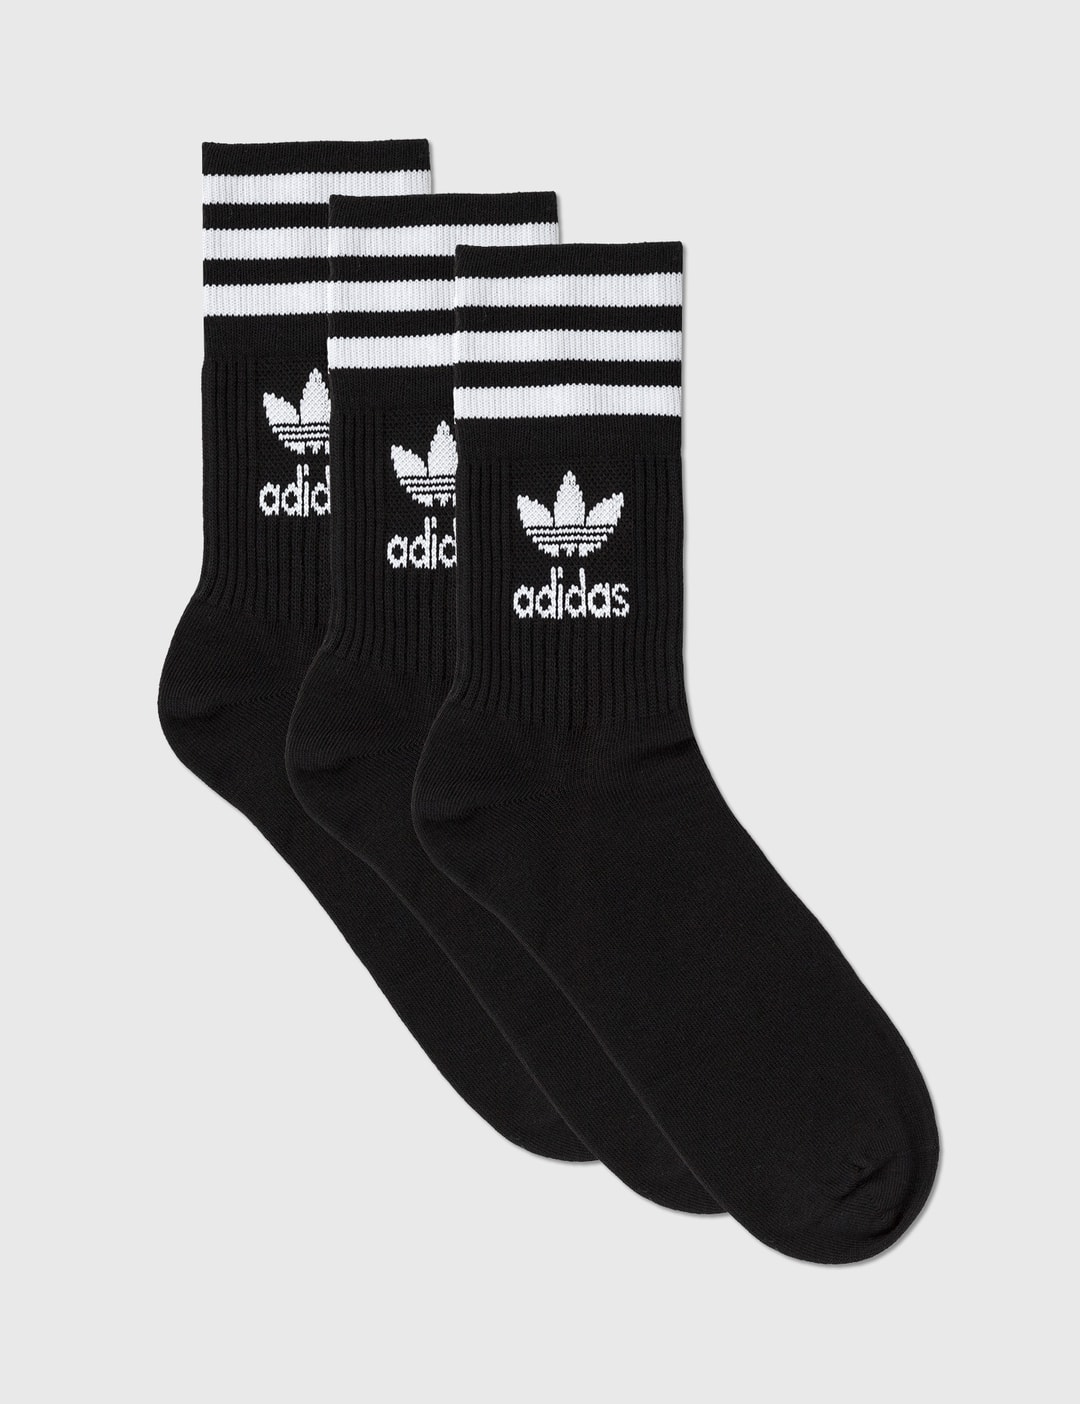 Adidas Originals - Mid Cut Crew Socks 3 Pairs | HBX - Globally Curated ...